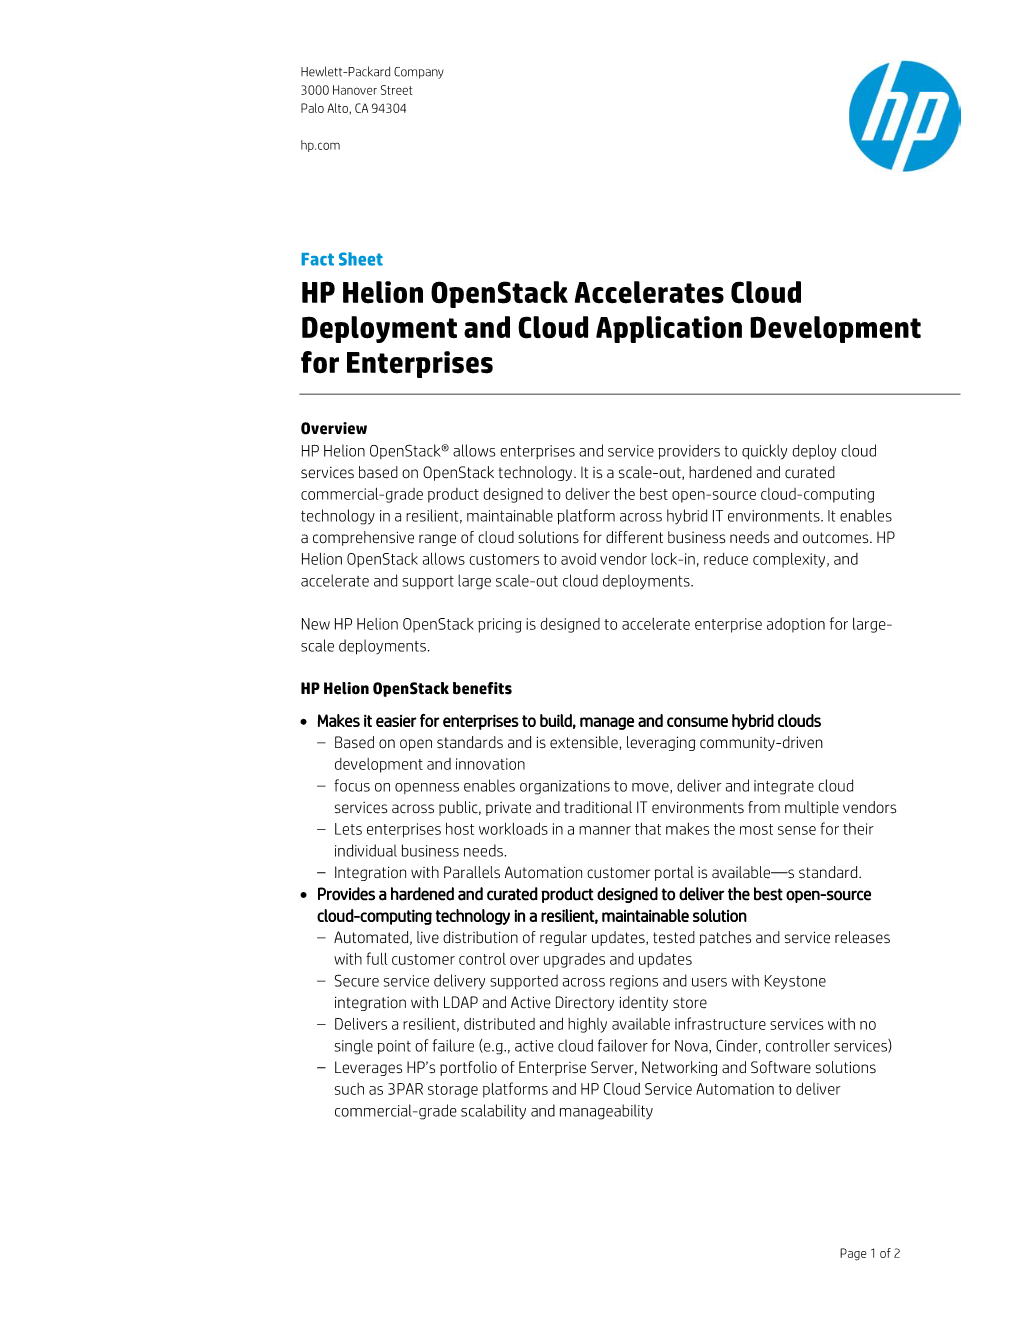 HP Helion Openstack Accelerates Cloud Deployment and Cloud Application Development for Enterprises